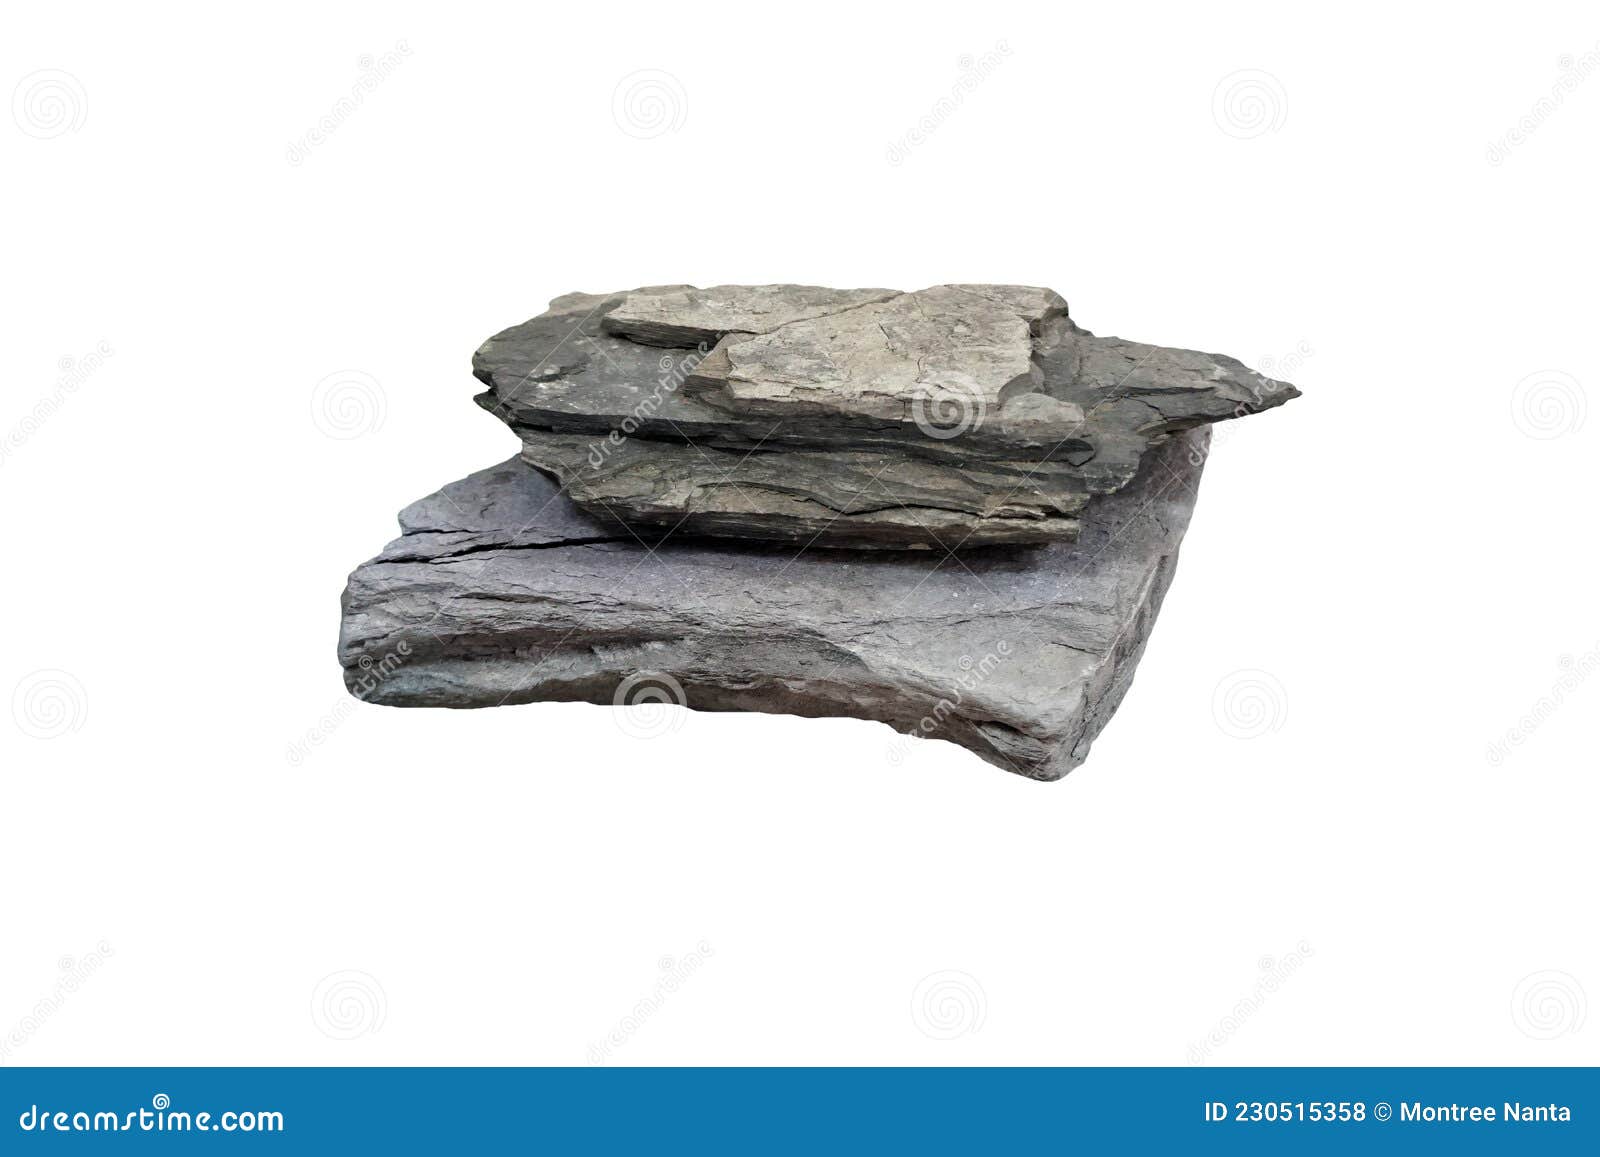 specimen of shale sedimentary rock  on white background.